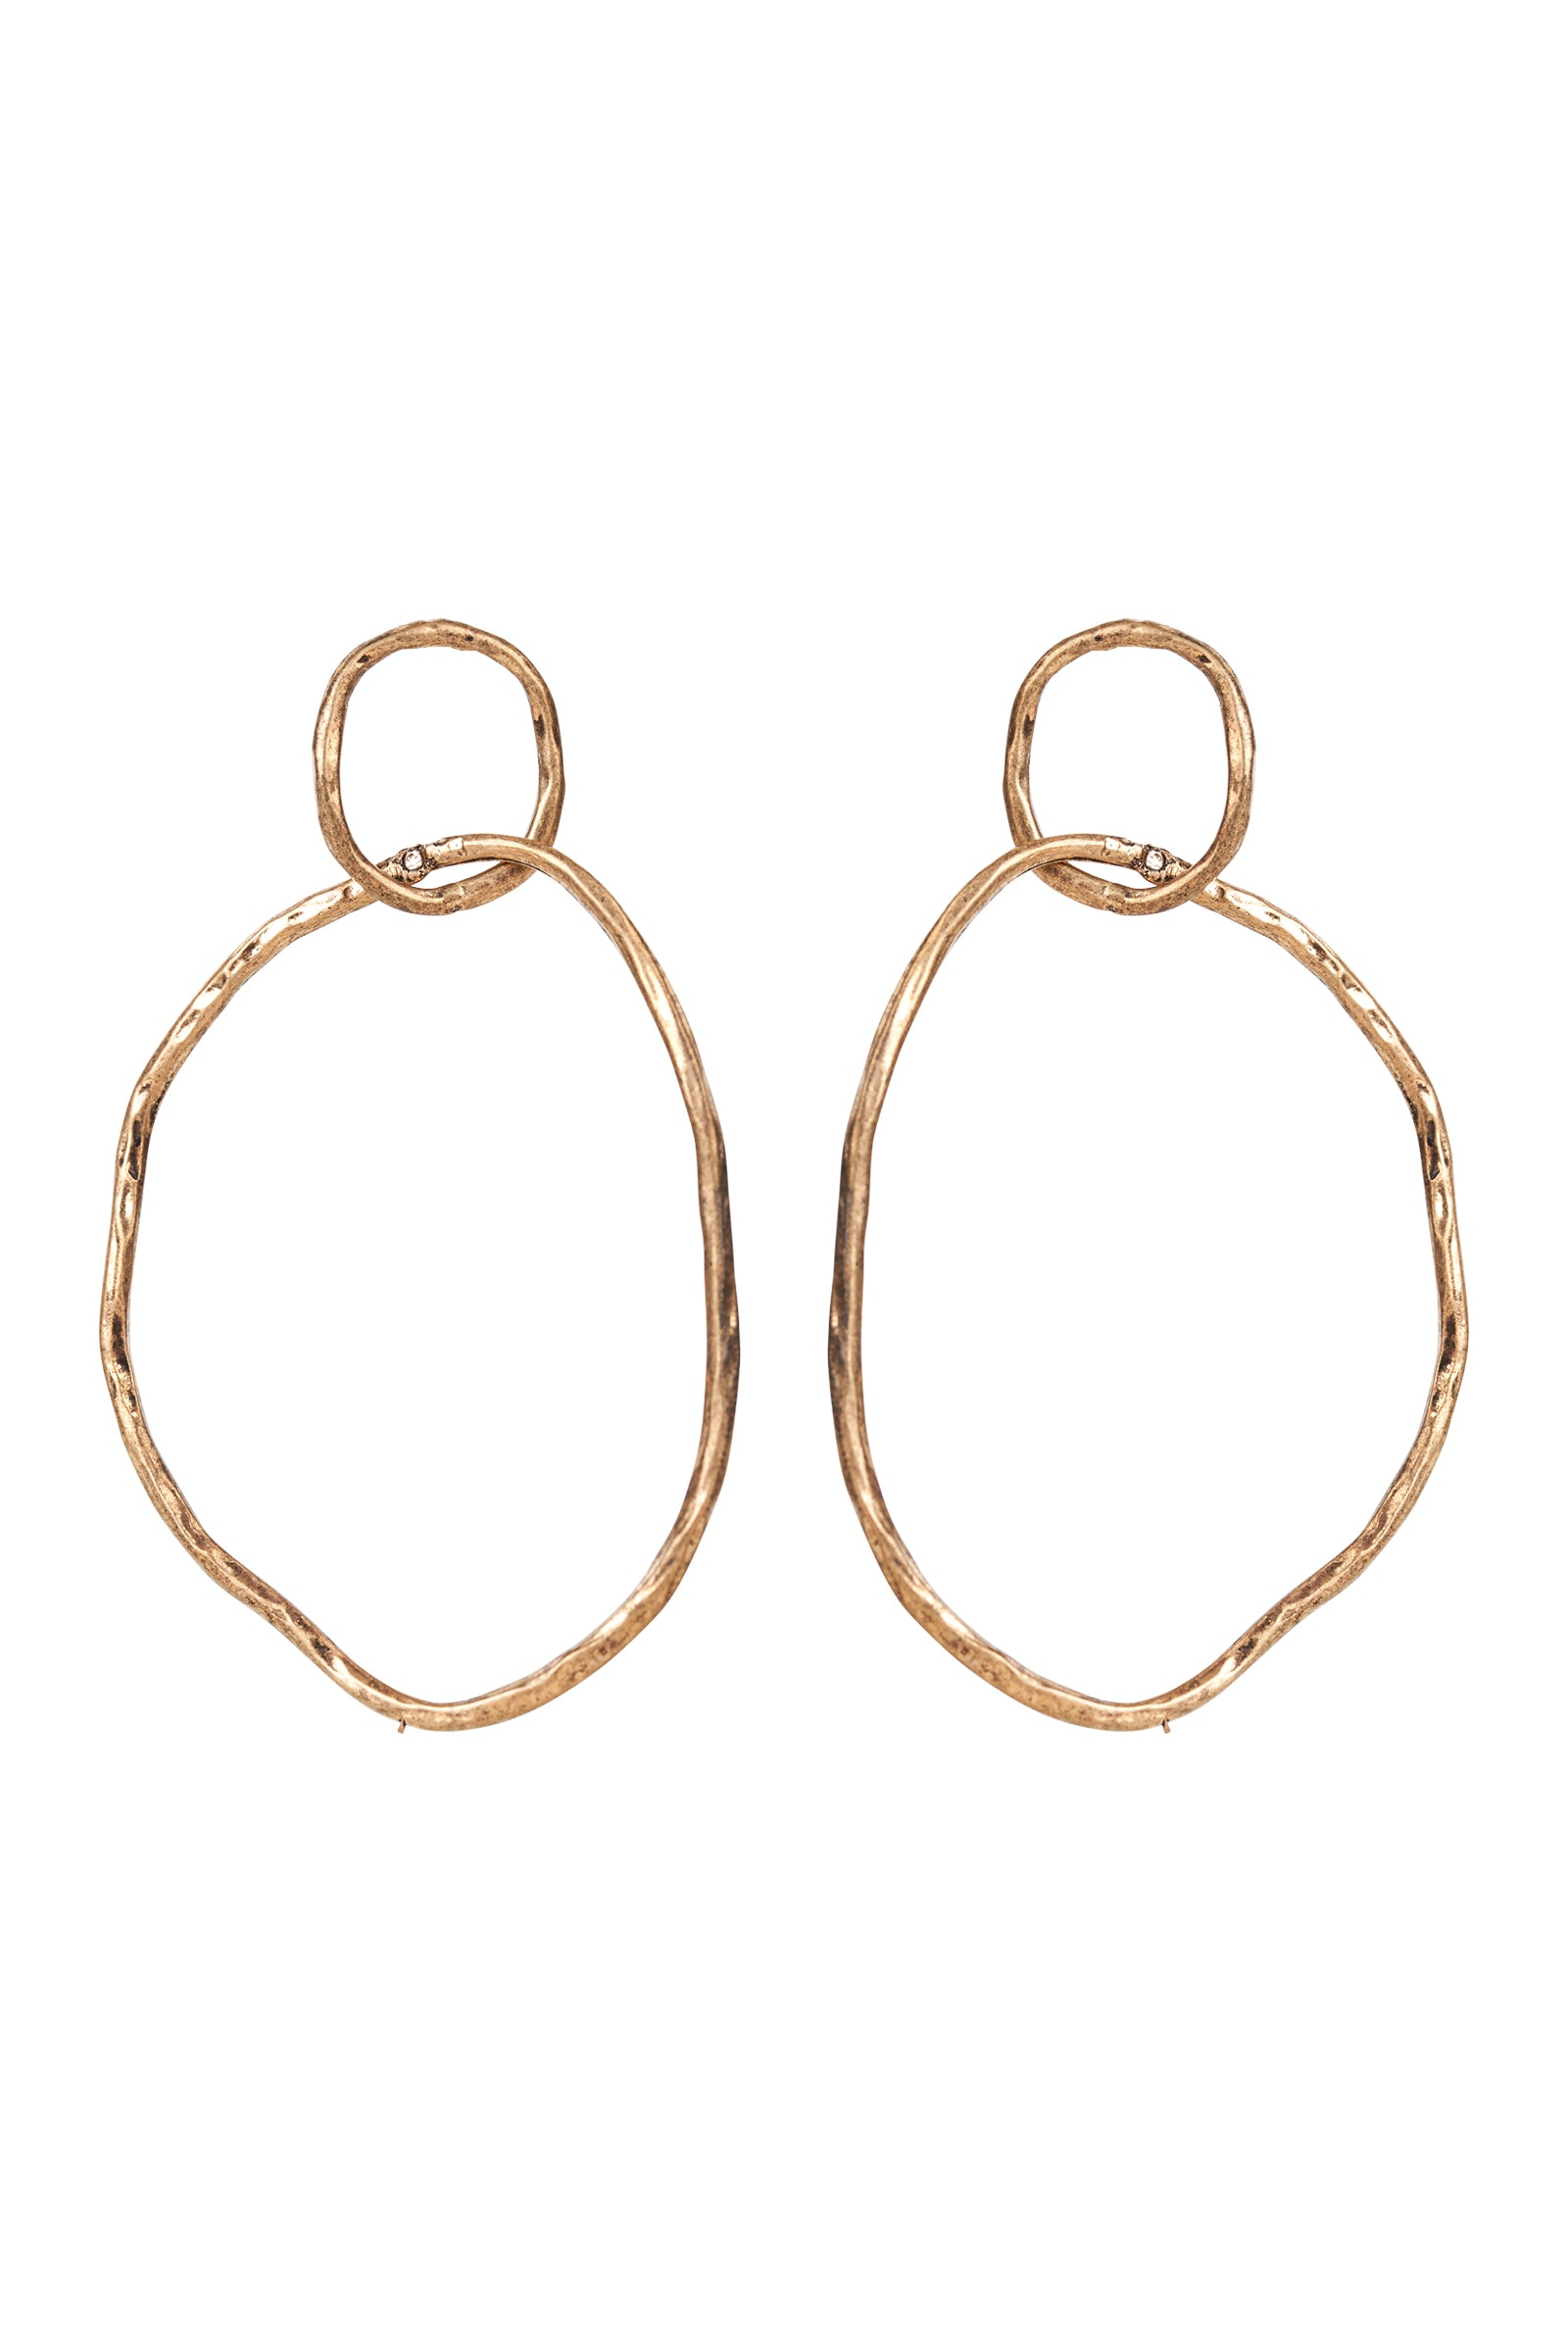 Est Earring - Gold Link - eb&ive Earring